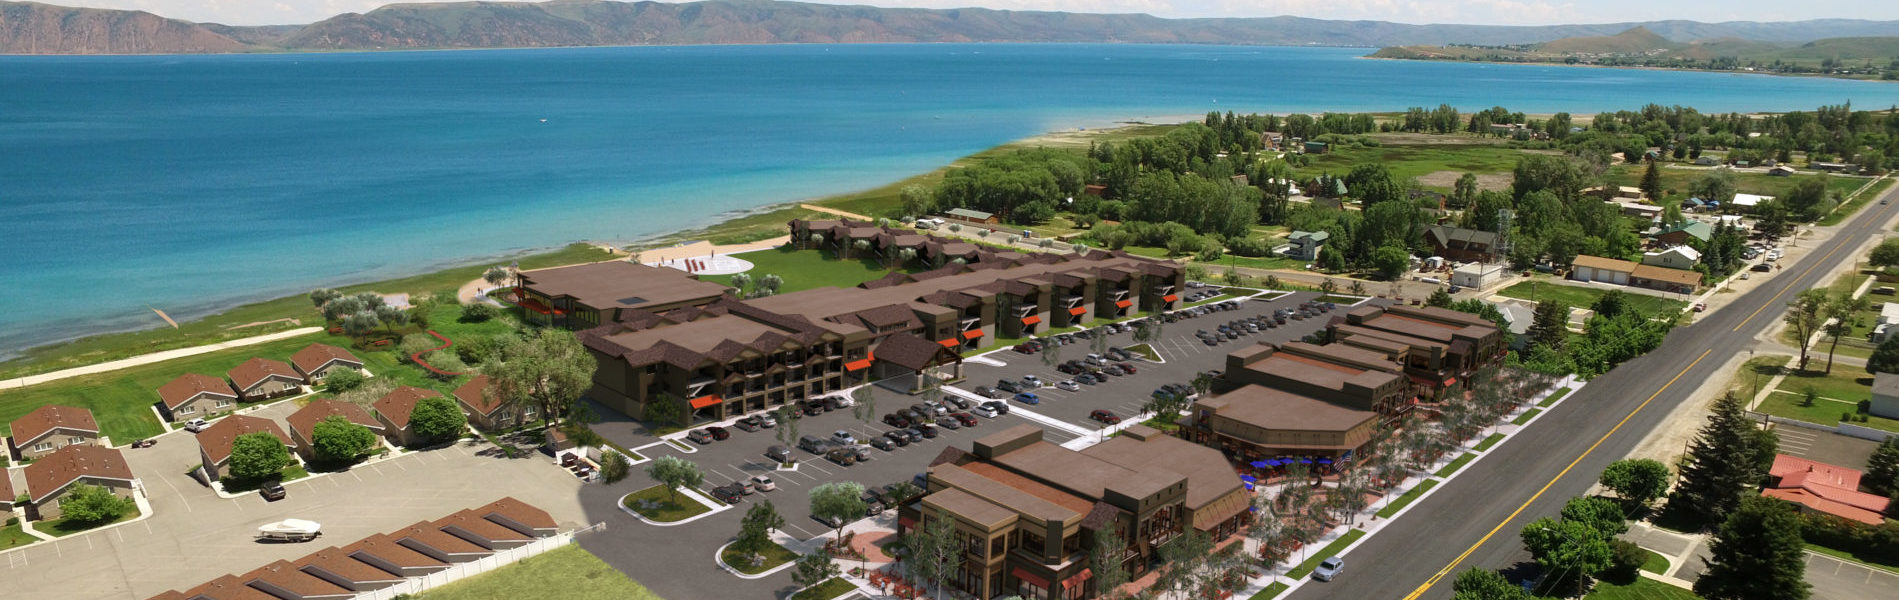 The Water S Edge Resort Explore Our Bear Lake Resort Property